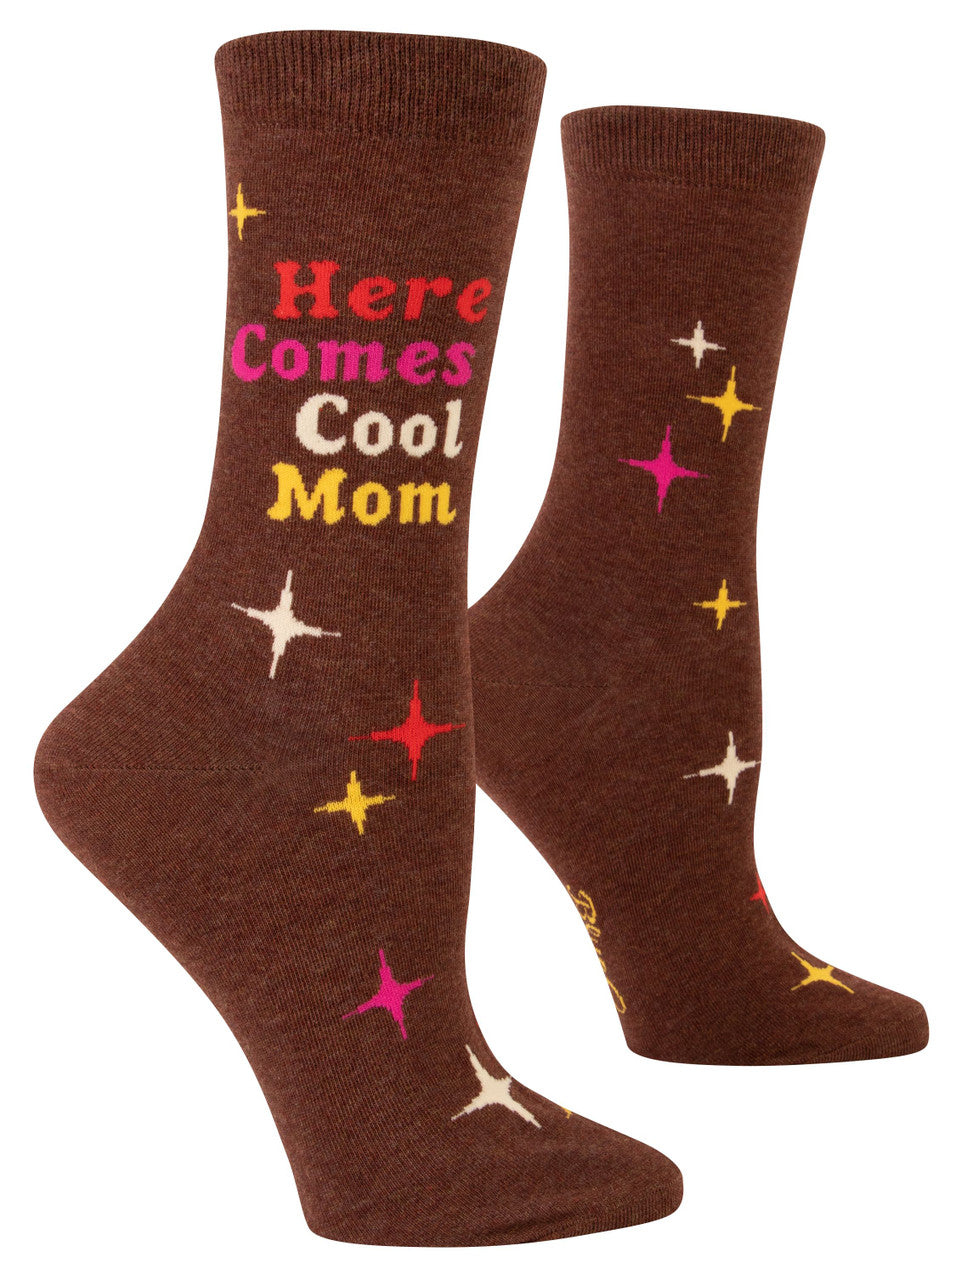 Here Comes Cool Mom - Women's Socks